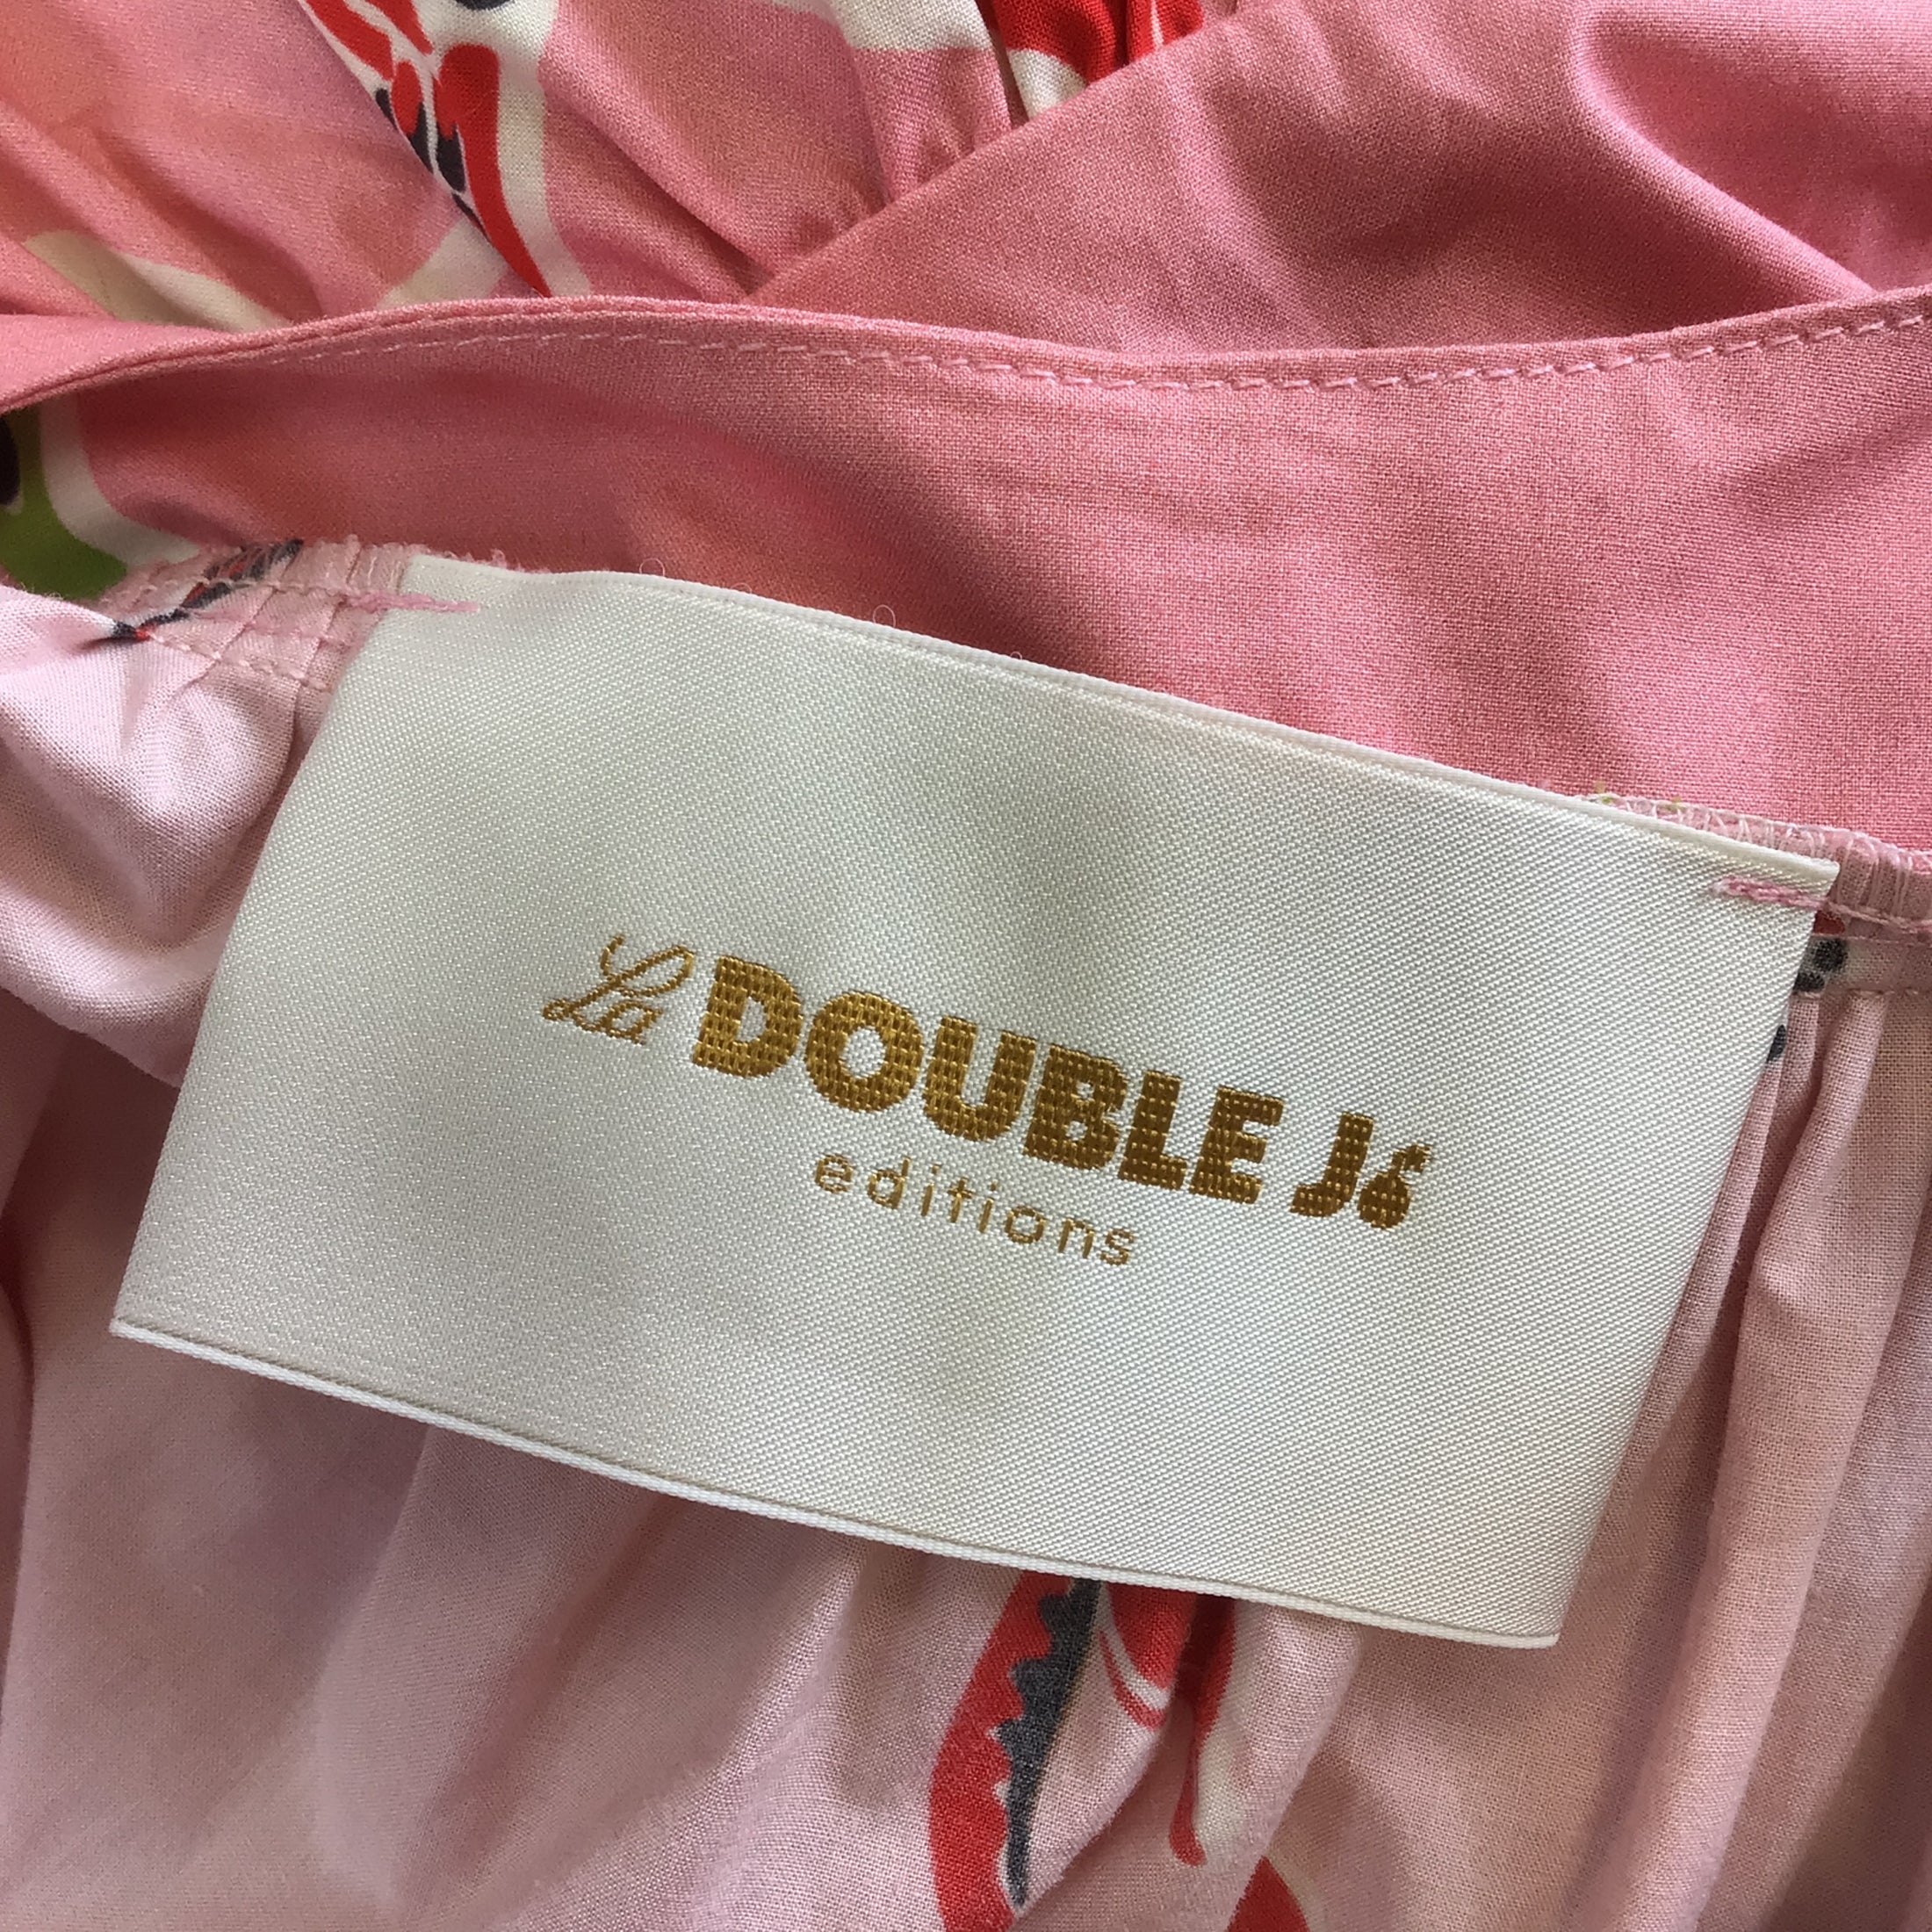 La DoubleJ Pink Multi Floral Printed Belted Cotton Poplin Maxi Dress